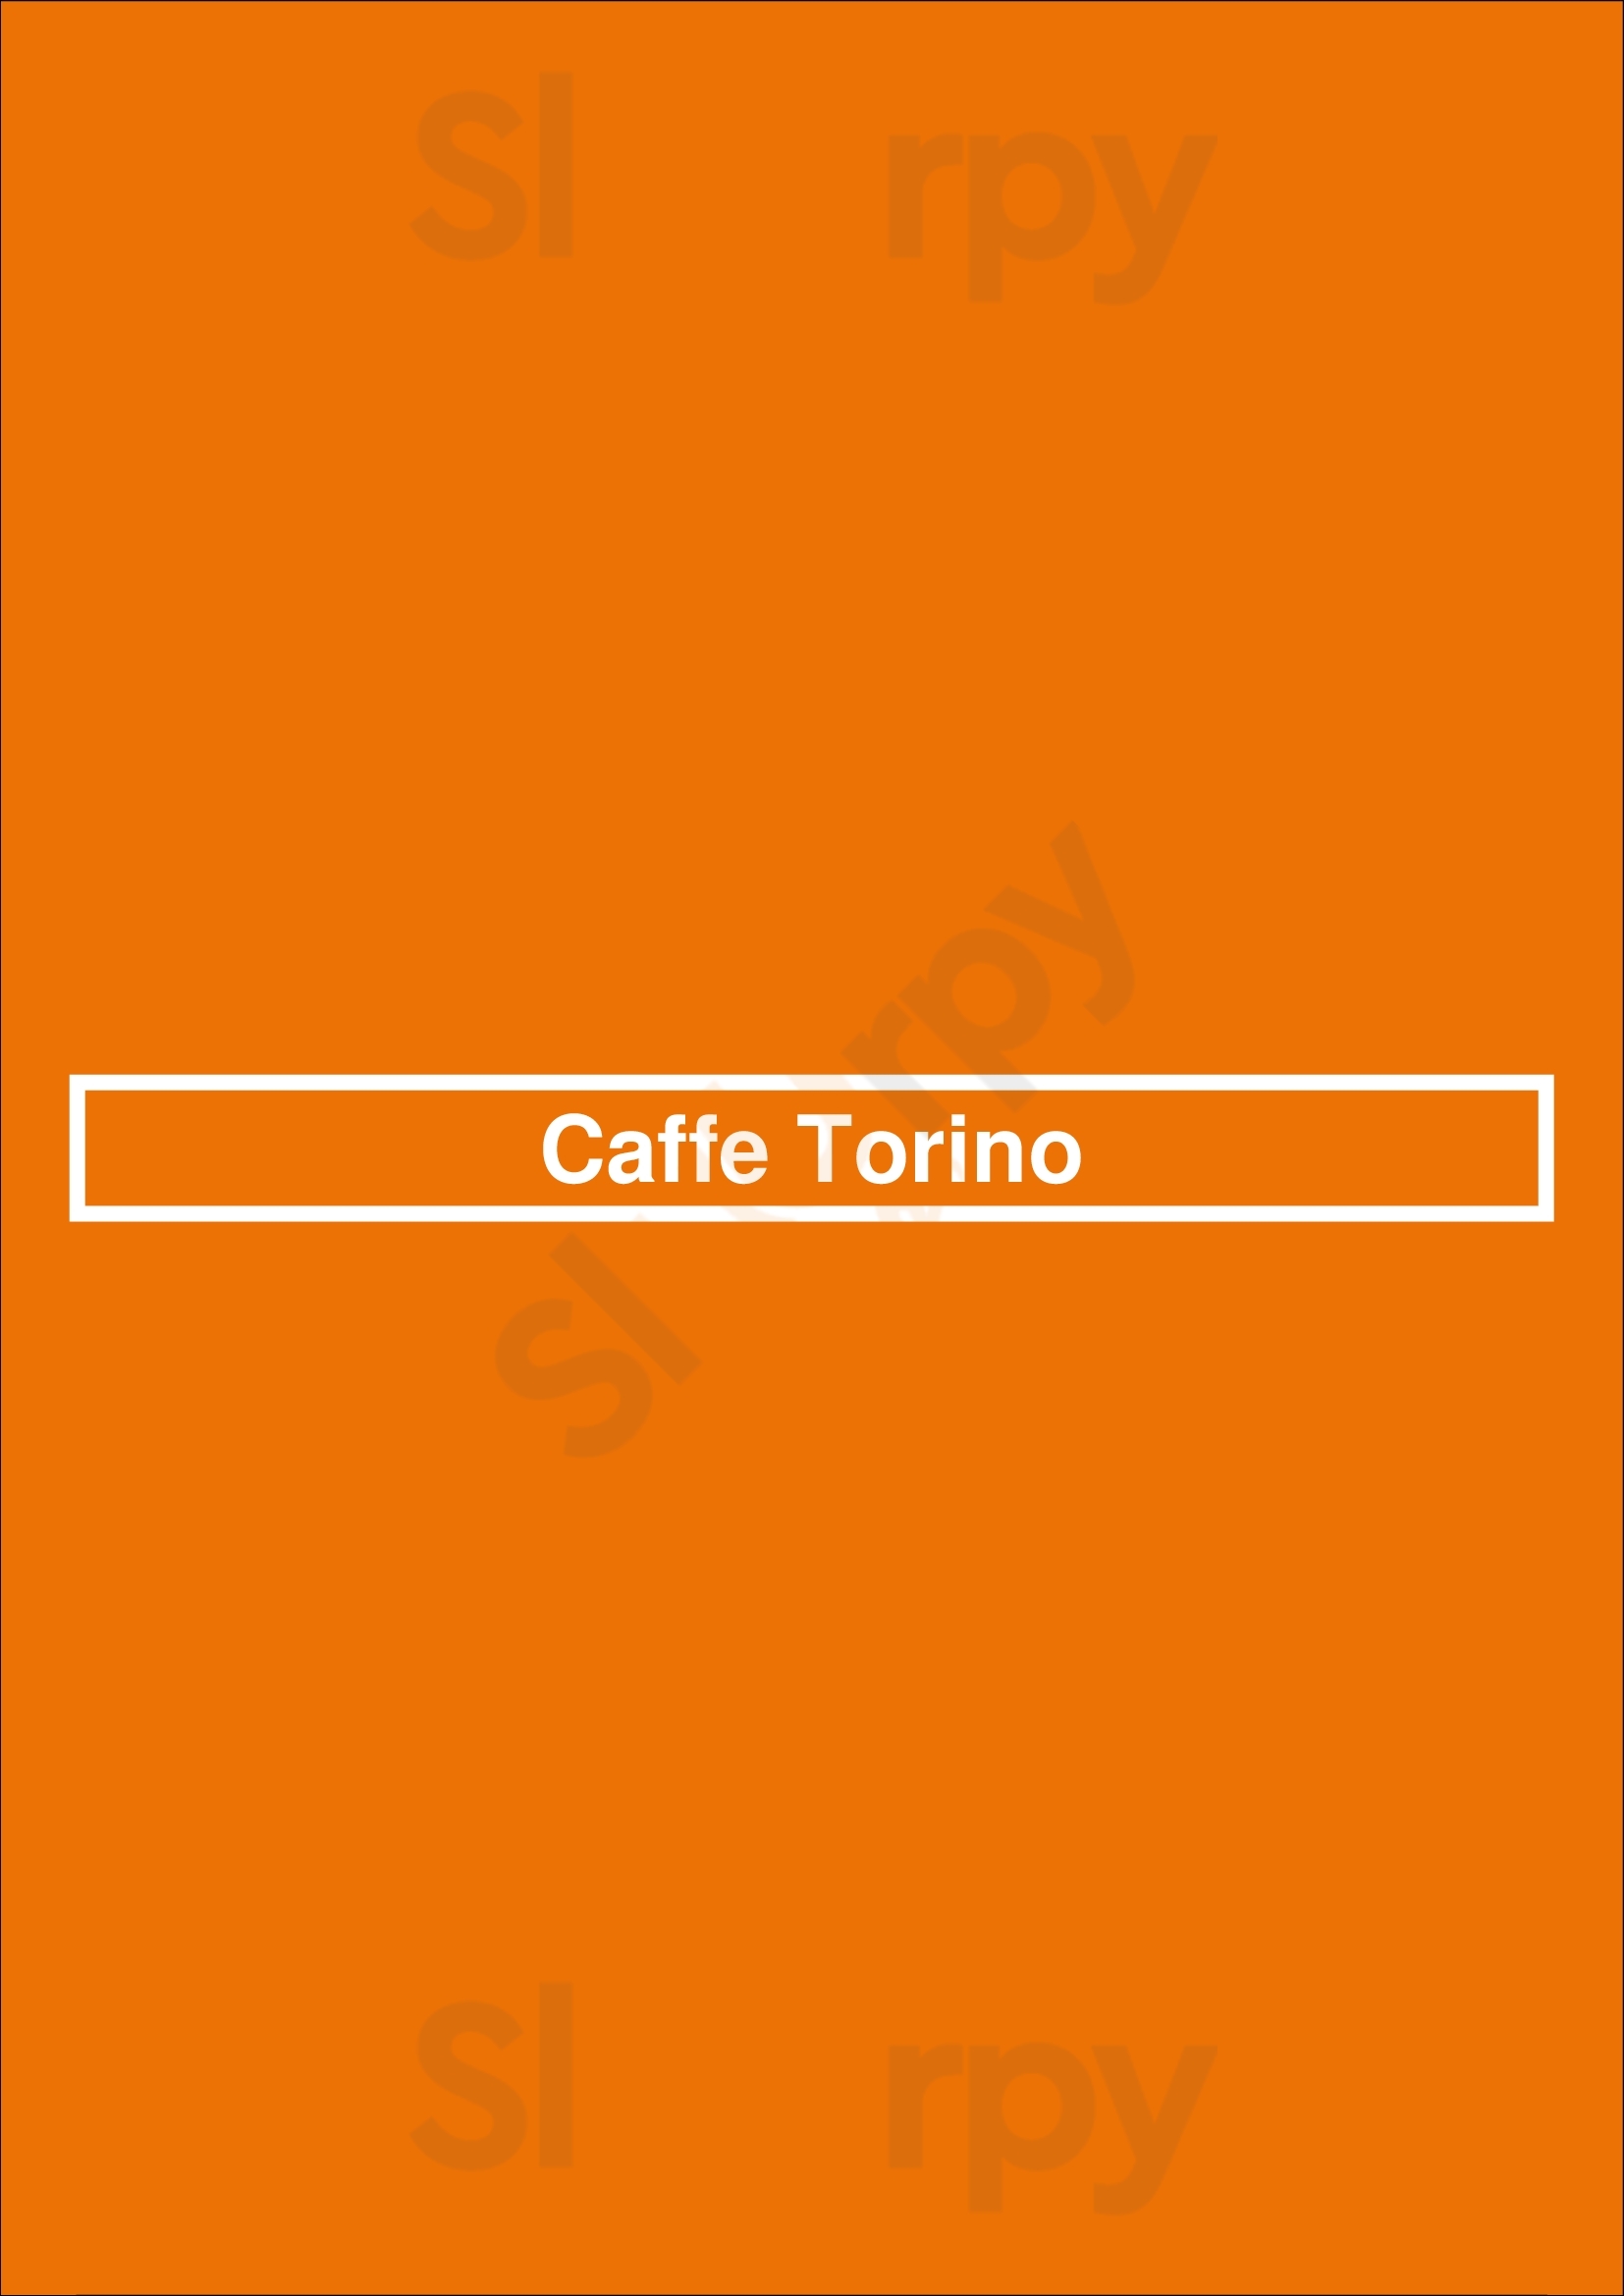 Caffe Torino Tucson Menu - 1